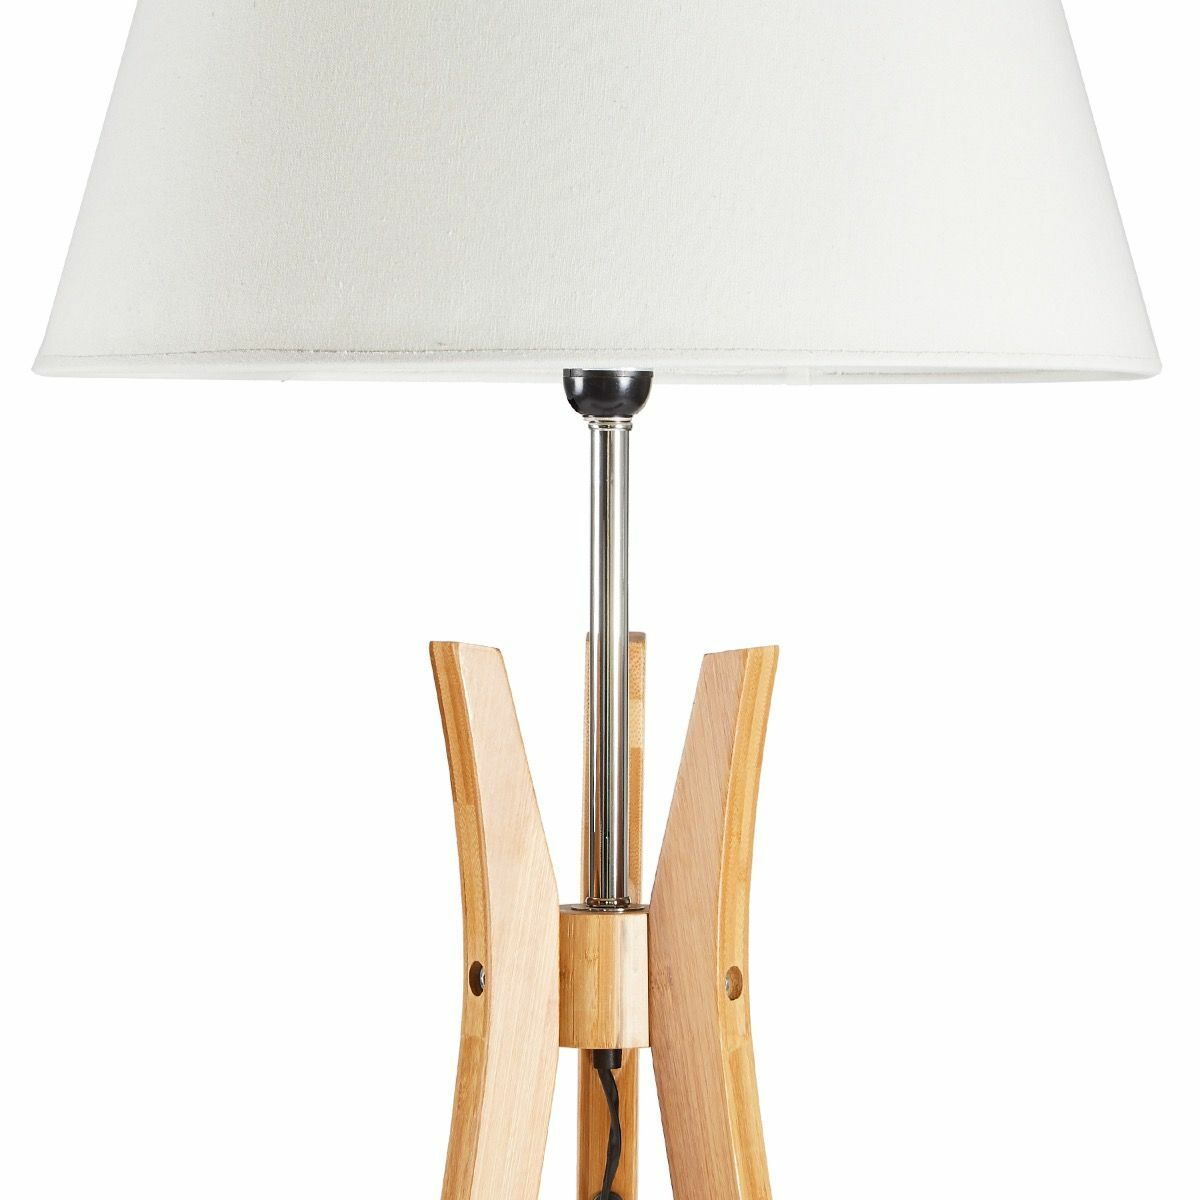 Wooden Shelf Floor Lamp - Cream Shade